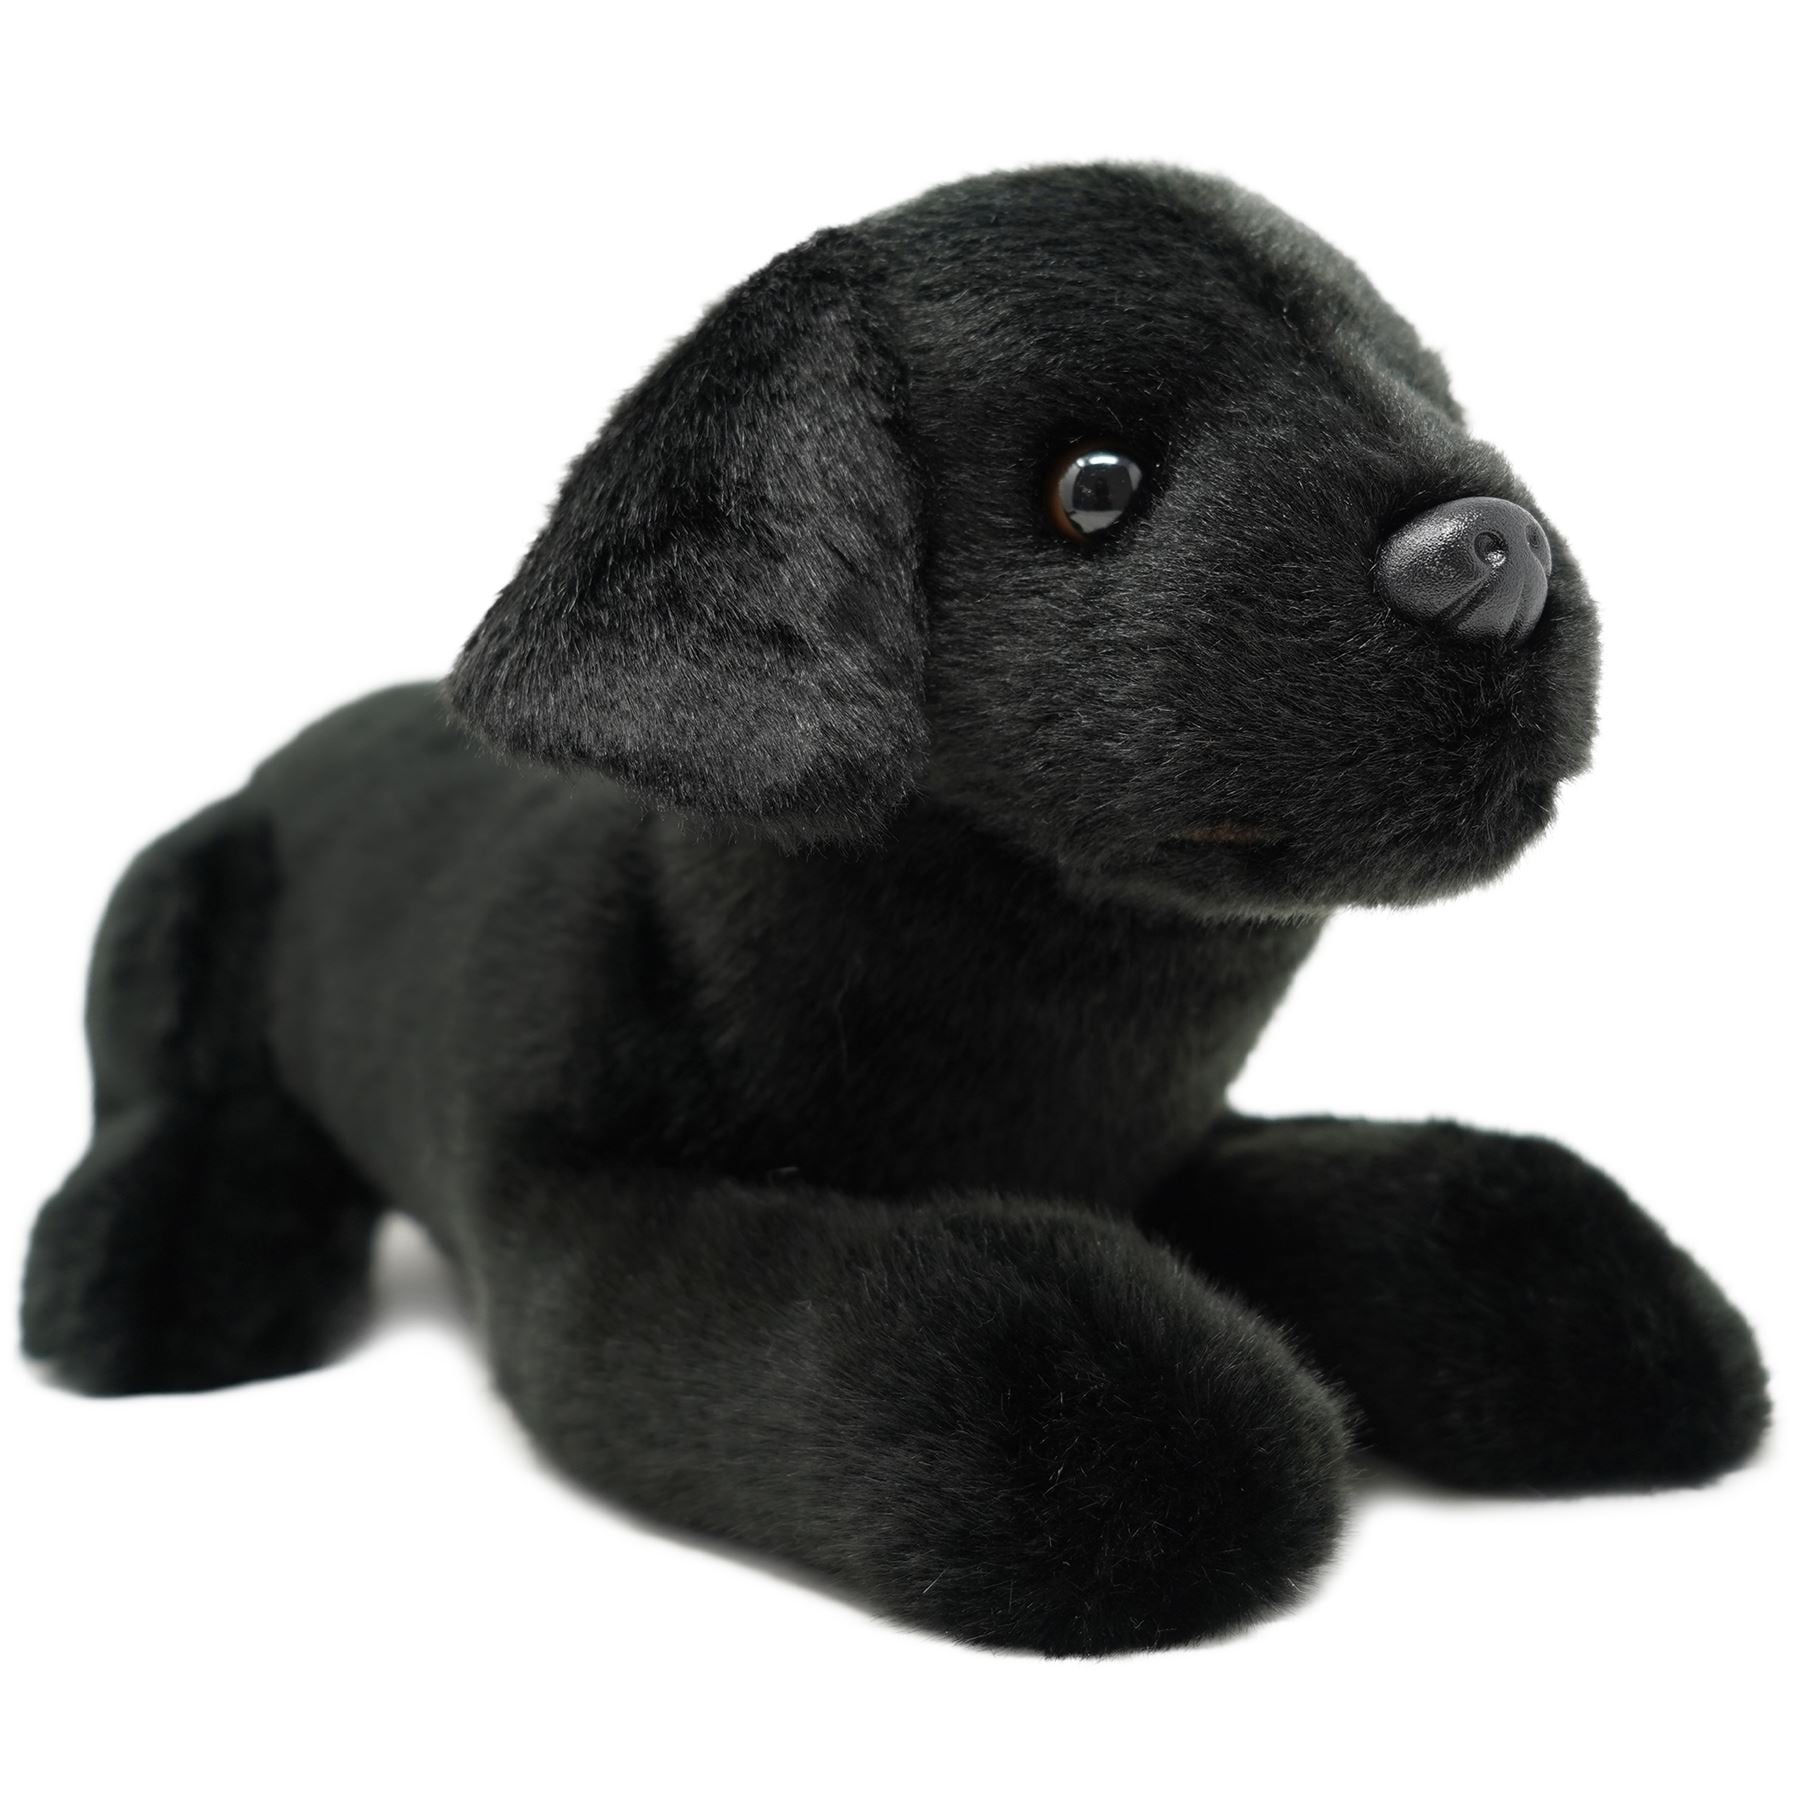 Puppy/Dog 6" x 9" Brand New Black Stuffed Lab By Petting Zoo 